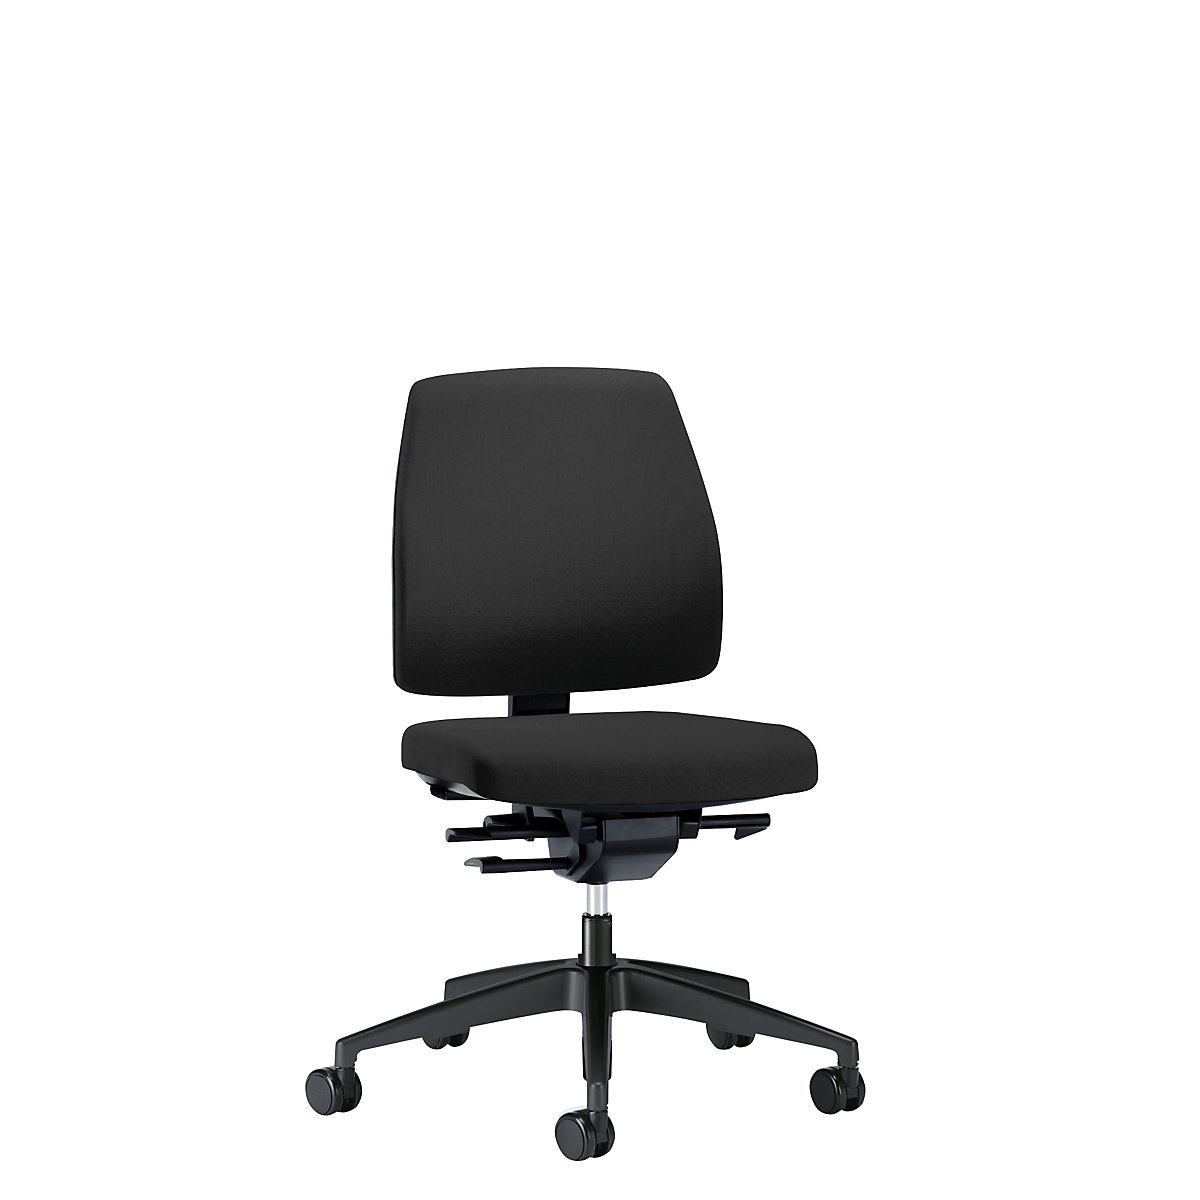 GOAL office swivel chair, back rest height 430 mm – interstuhl